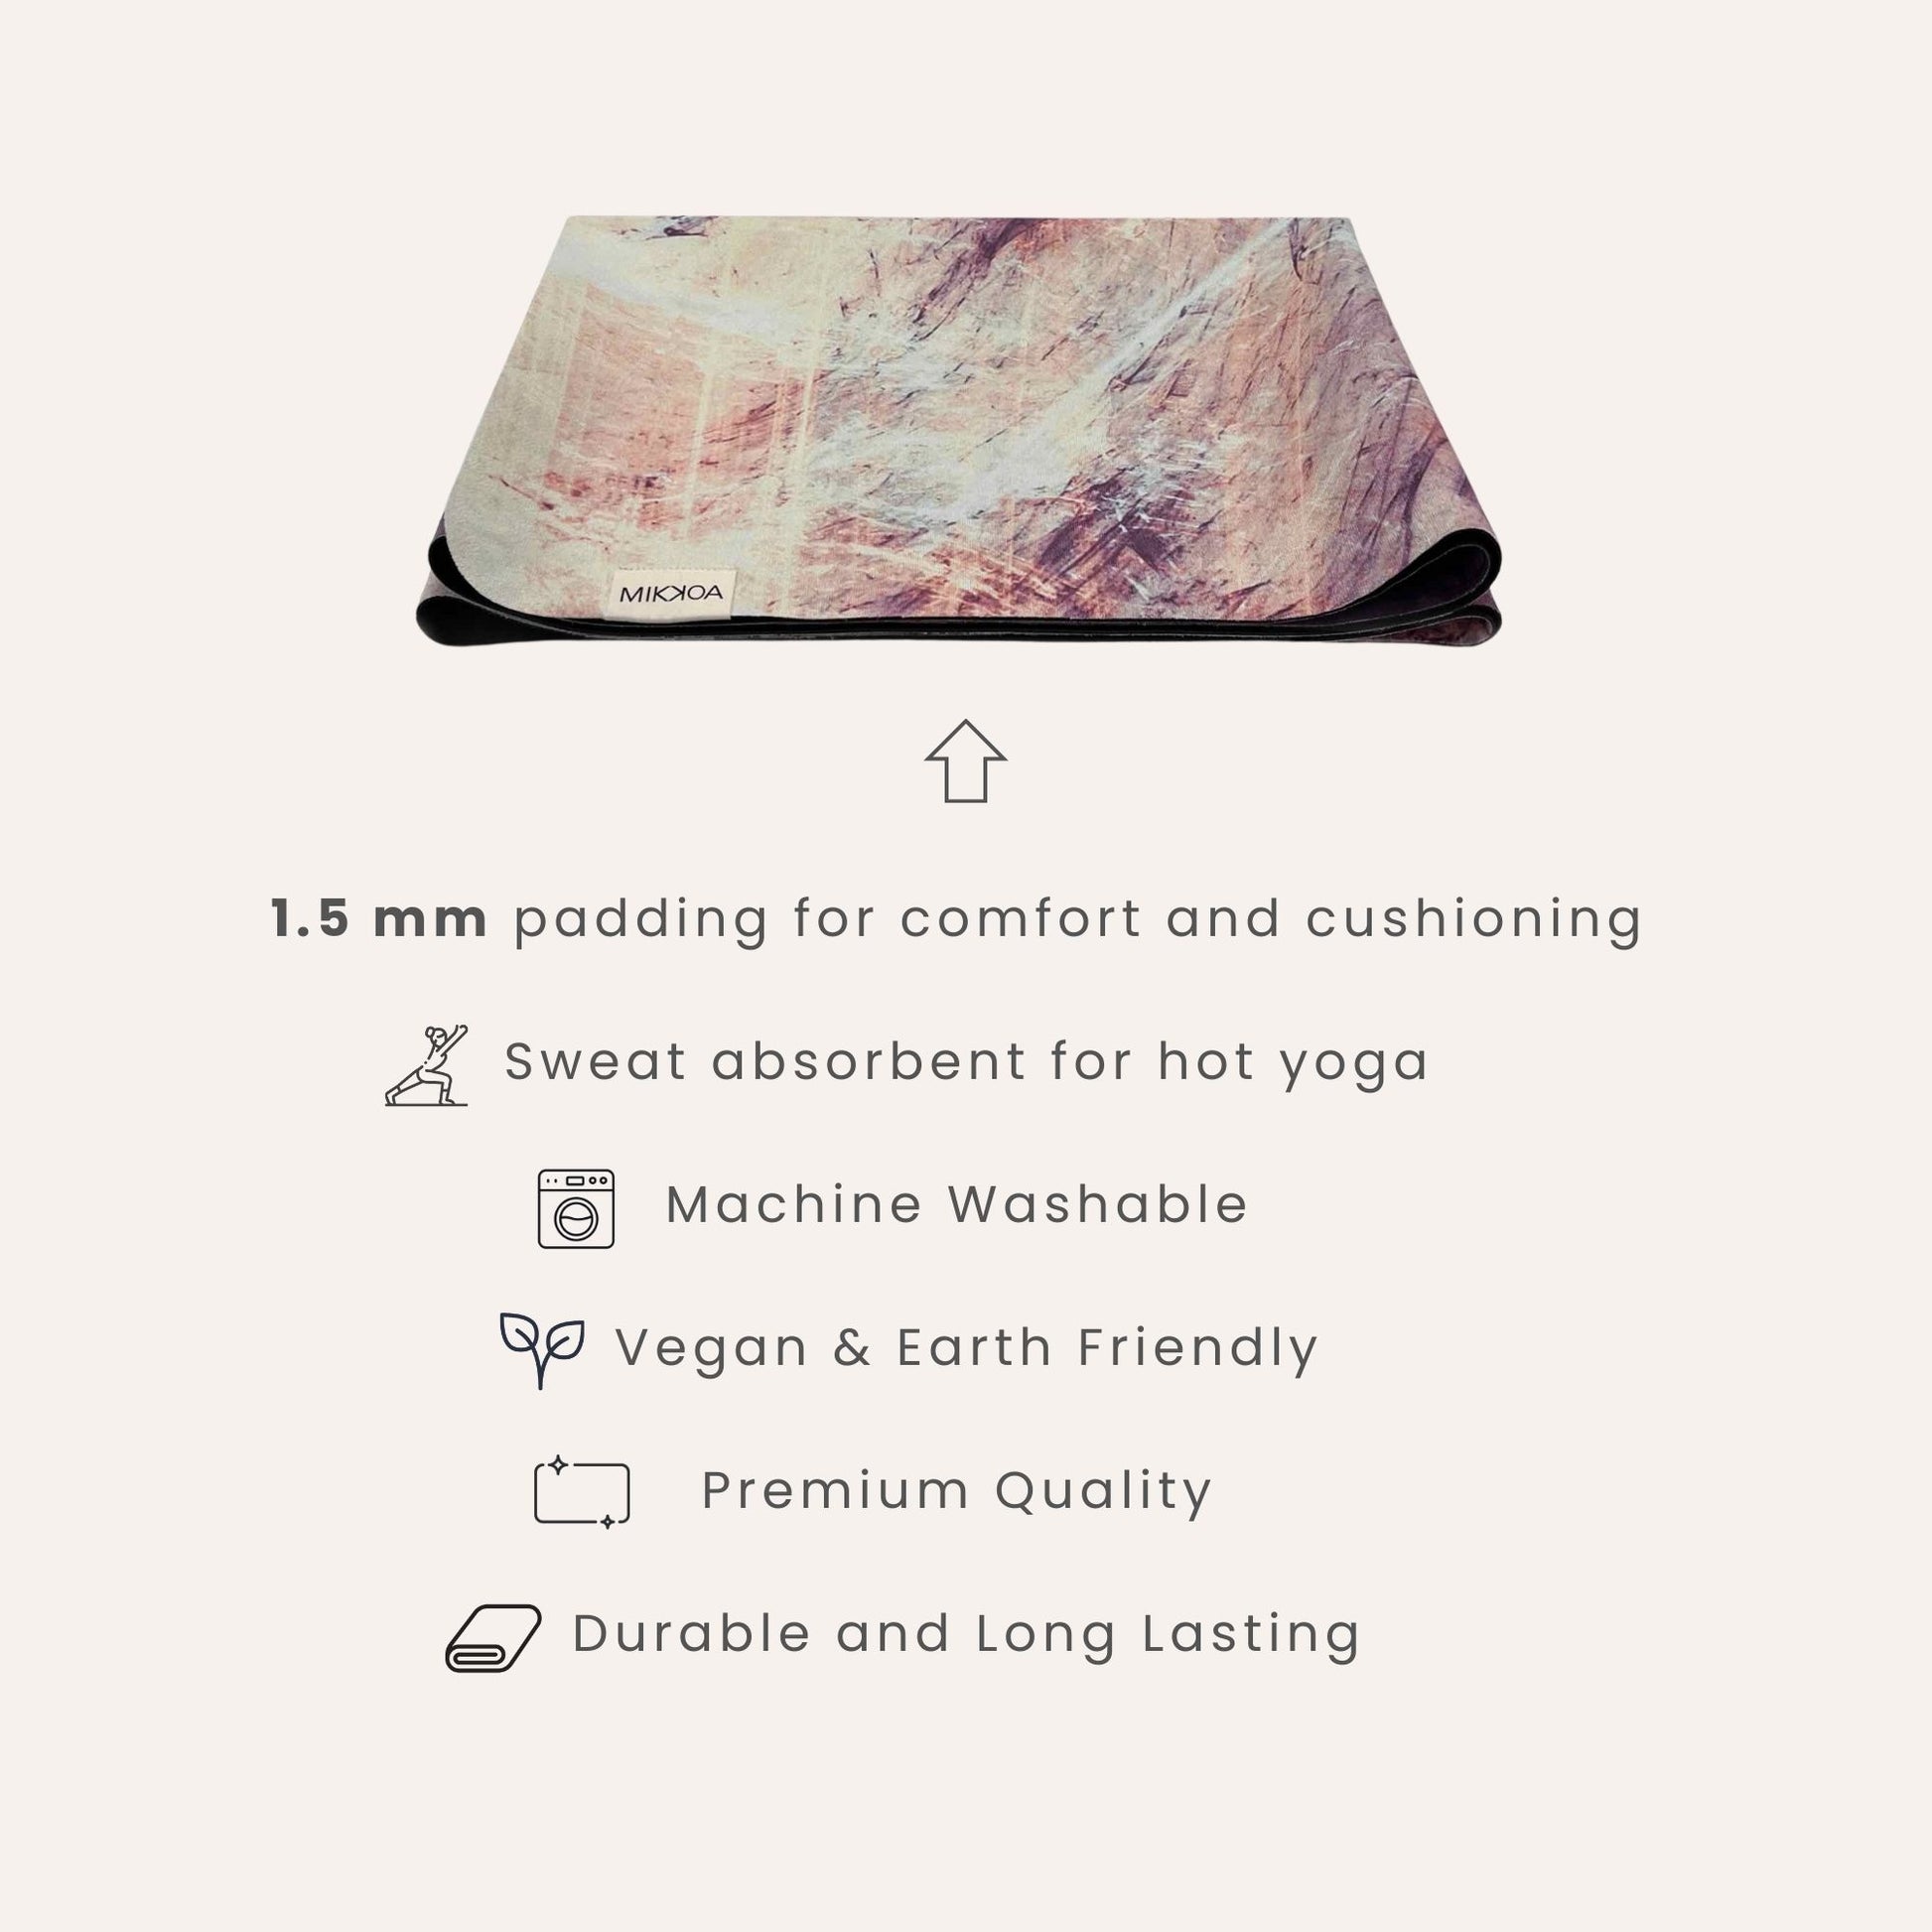 Best Foldable Yoga Mat-Folded Yoga Mat Features Image-Mikkoa Mystic Marble Travel Yoga Mat